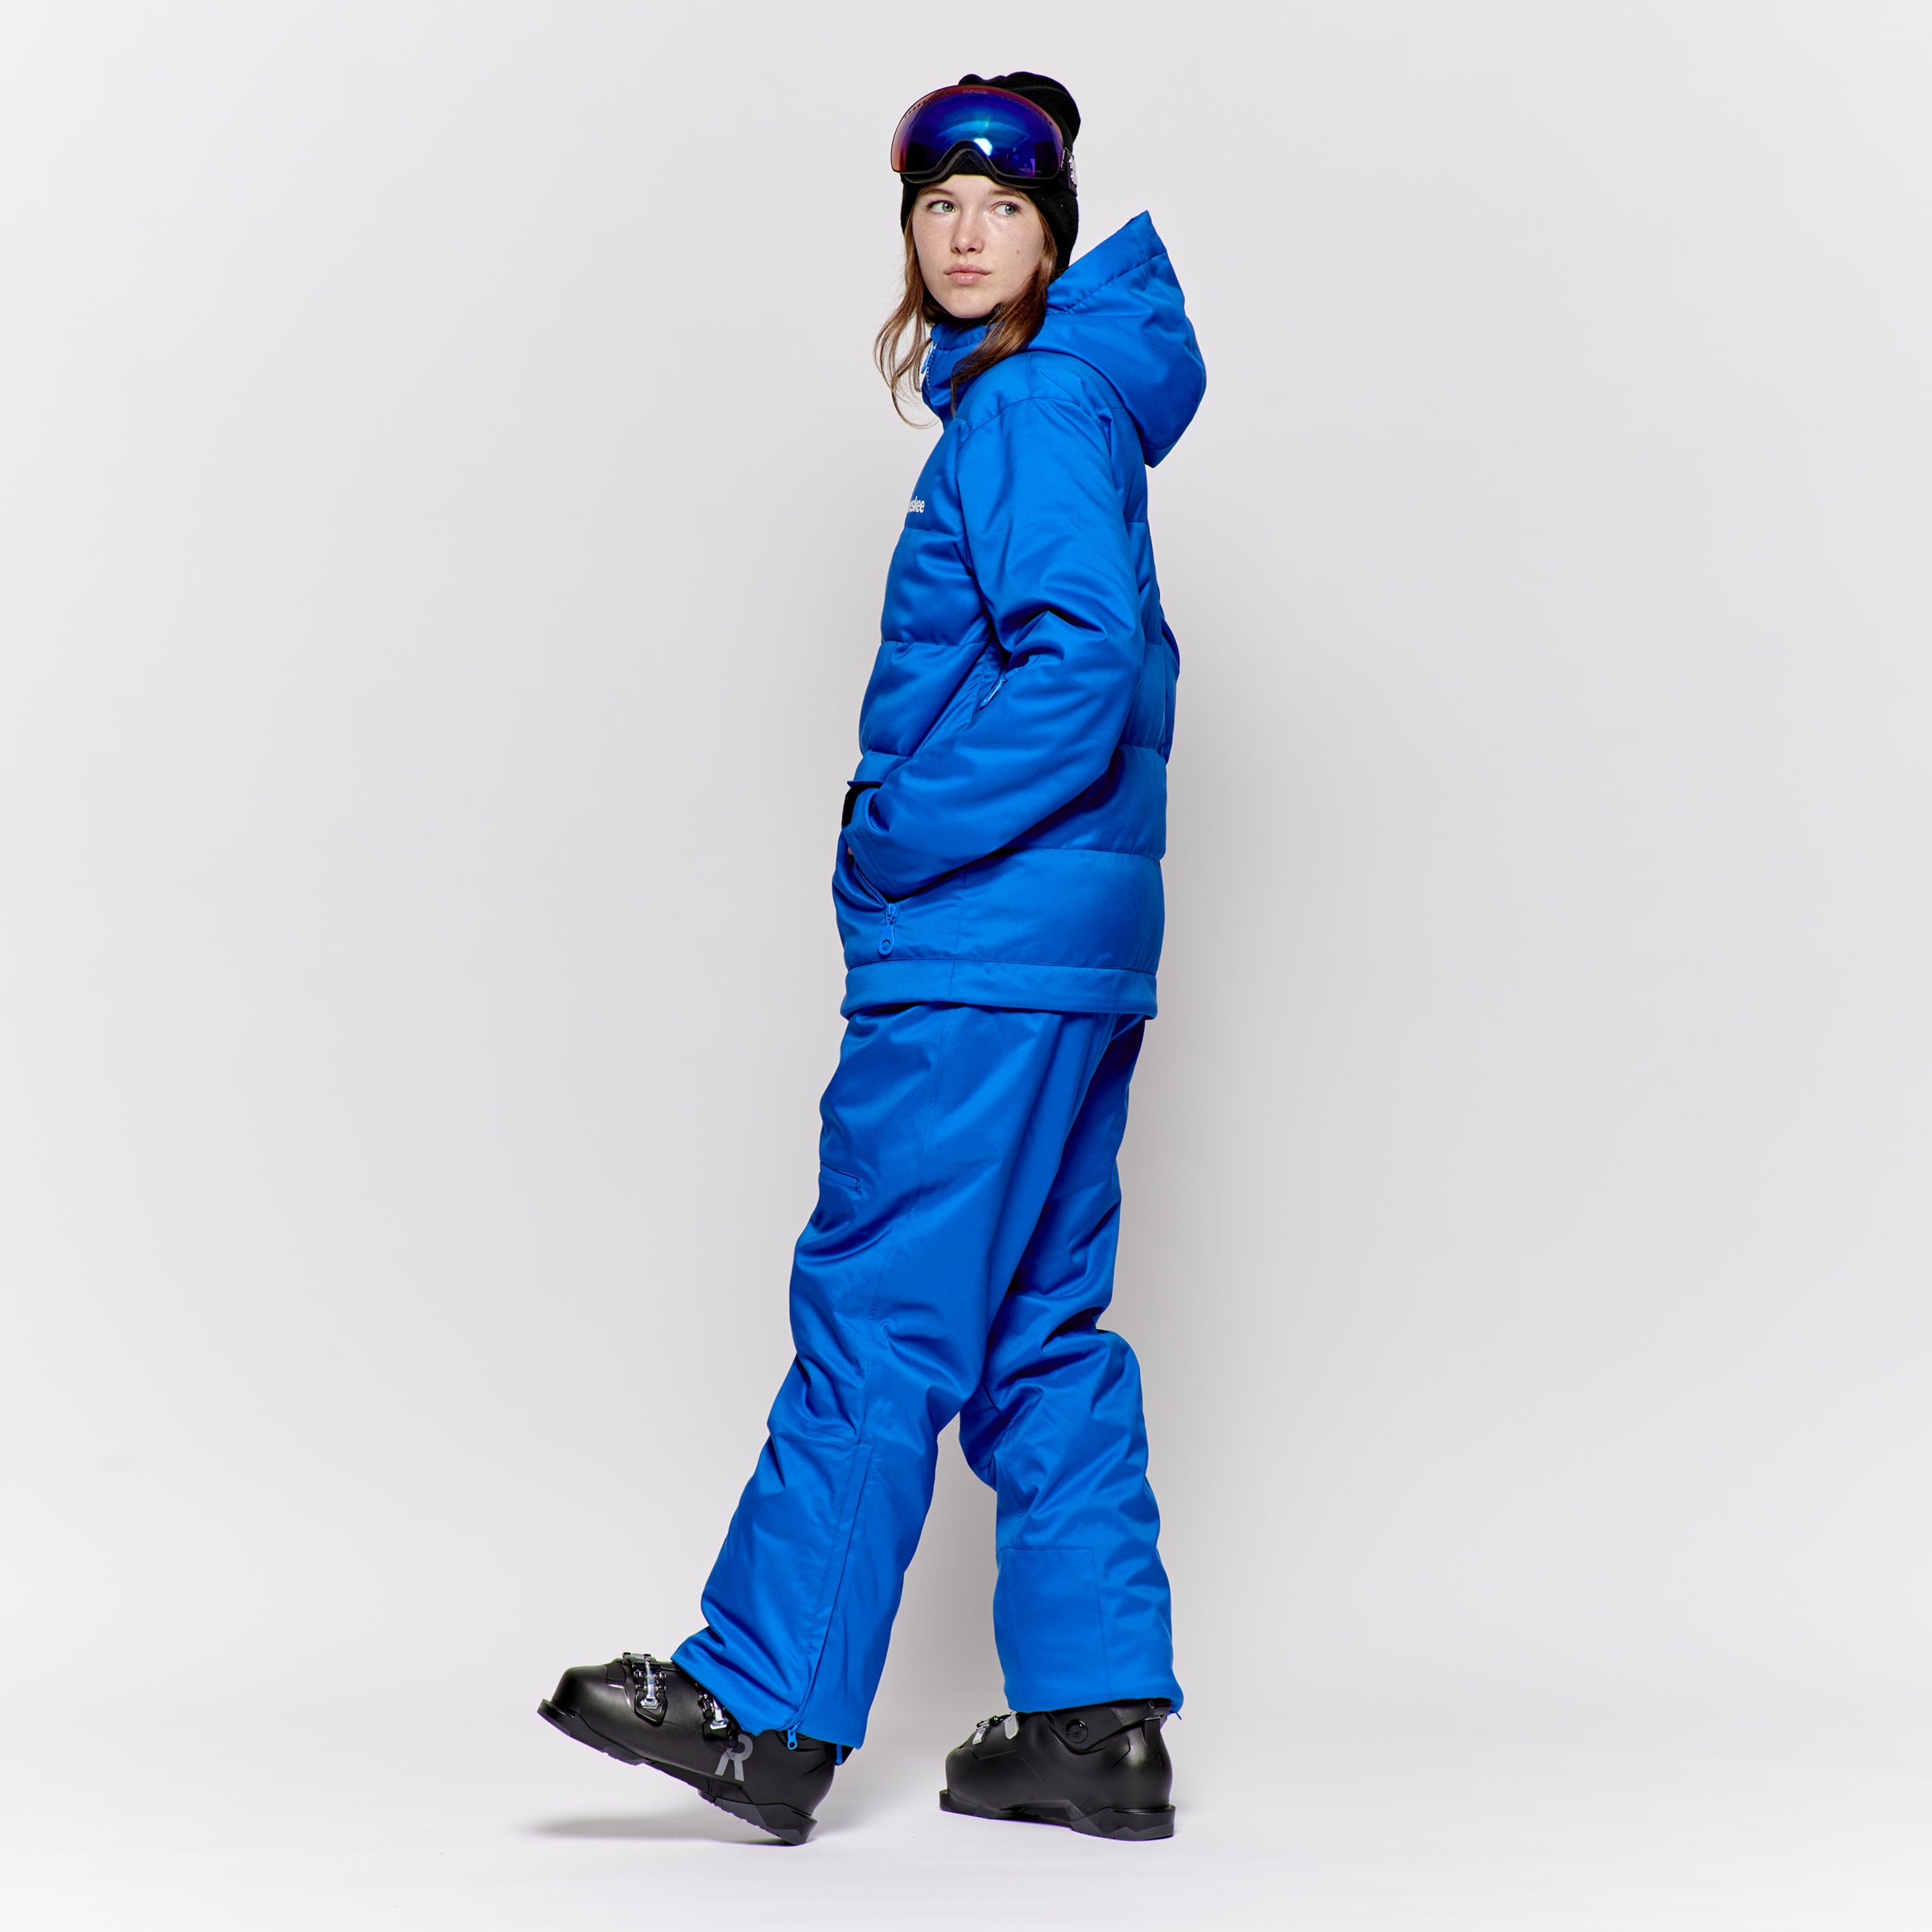 Light blue ski suit for women ETNA - Baby blue snowsuit - Ski